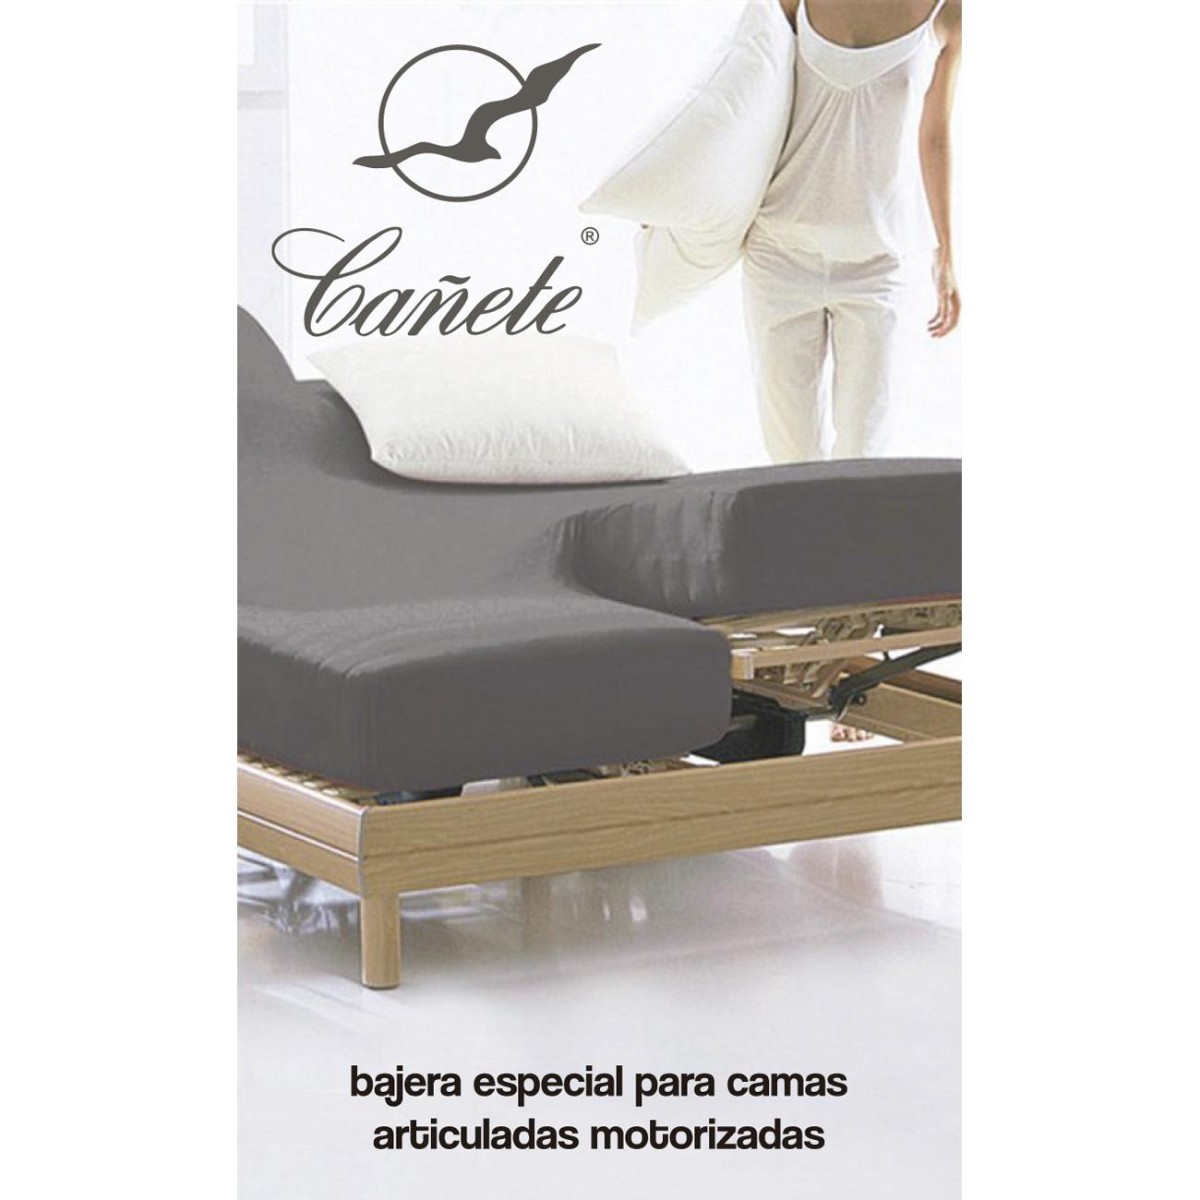 Bajera ajustable CAMA ARTICULADA Cañete - bajera - Luna Textil